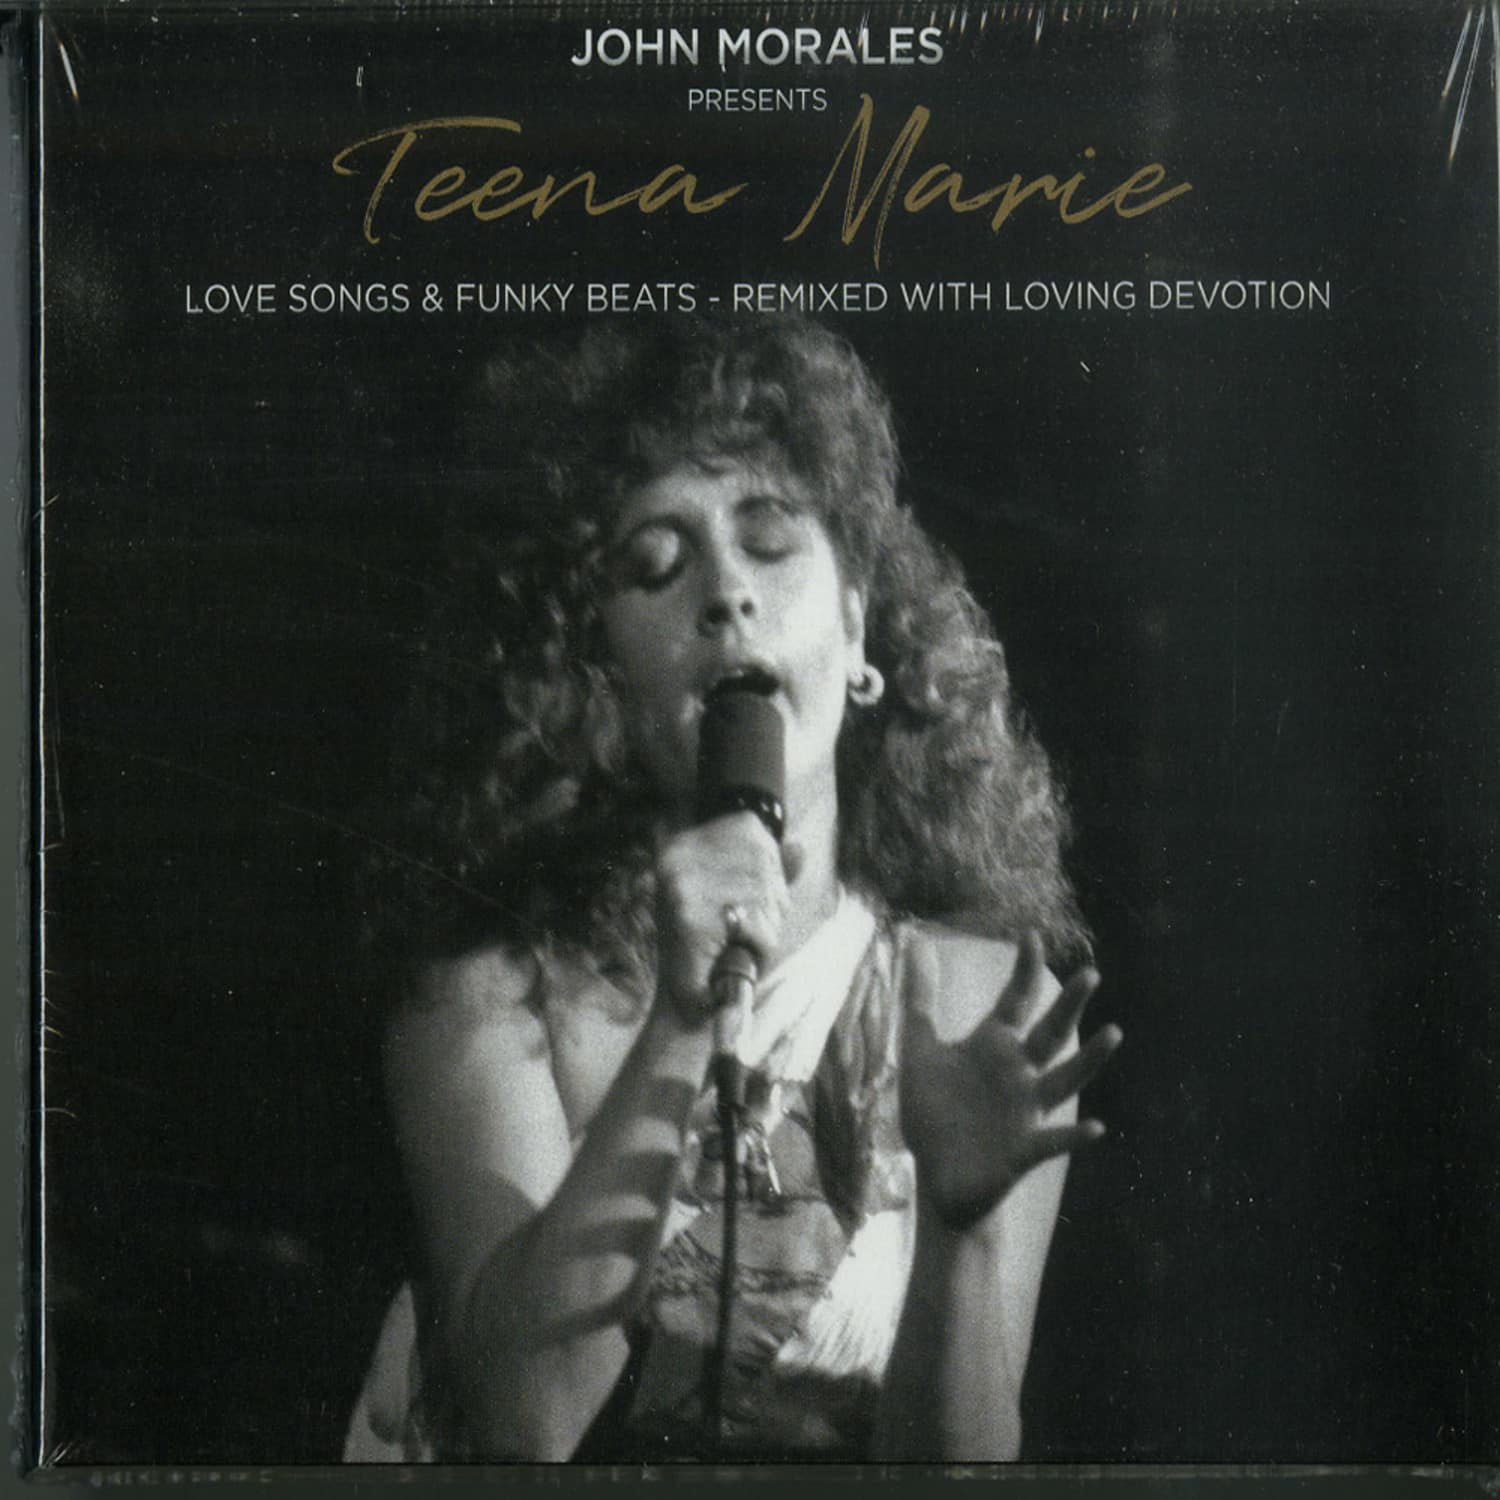 John Morales presents Teena Marie - LOVE SONGS & FUNKY BEATS - REMIXED WITH LOVING DEVOTION 